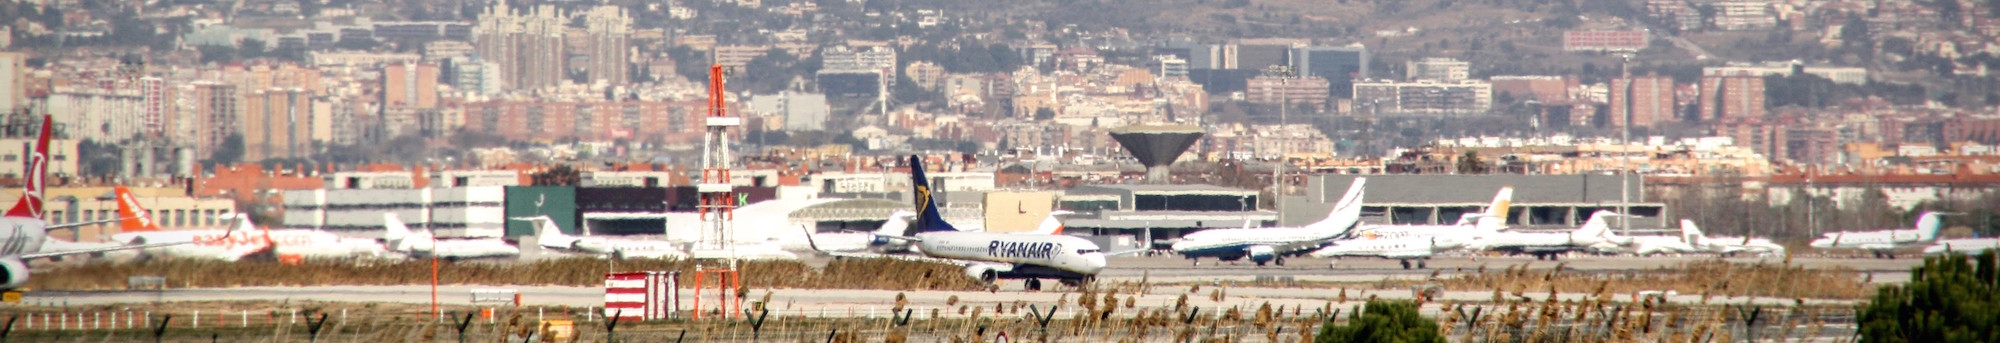 Cheapest flight deals per destination from Marseille (MRS)  from $32